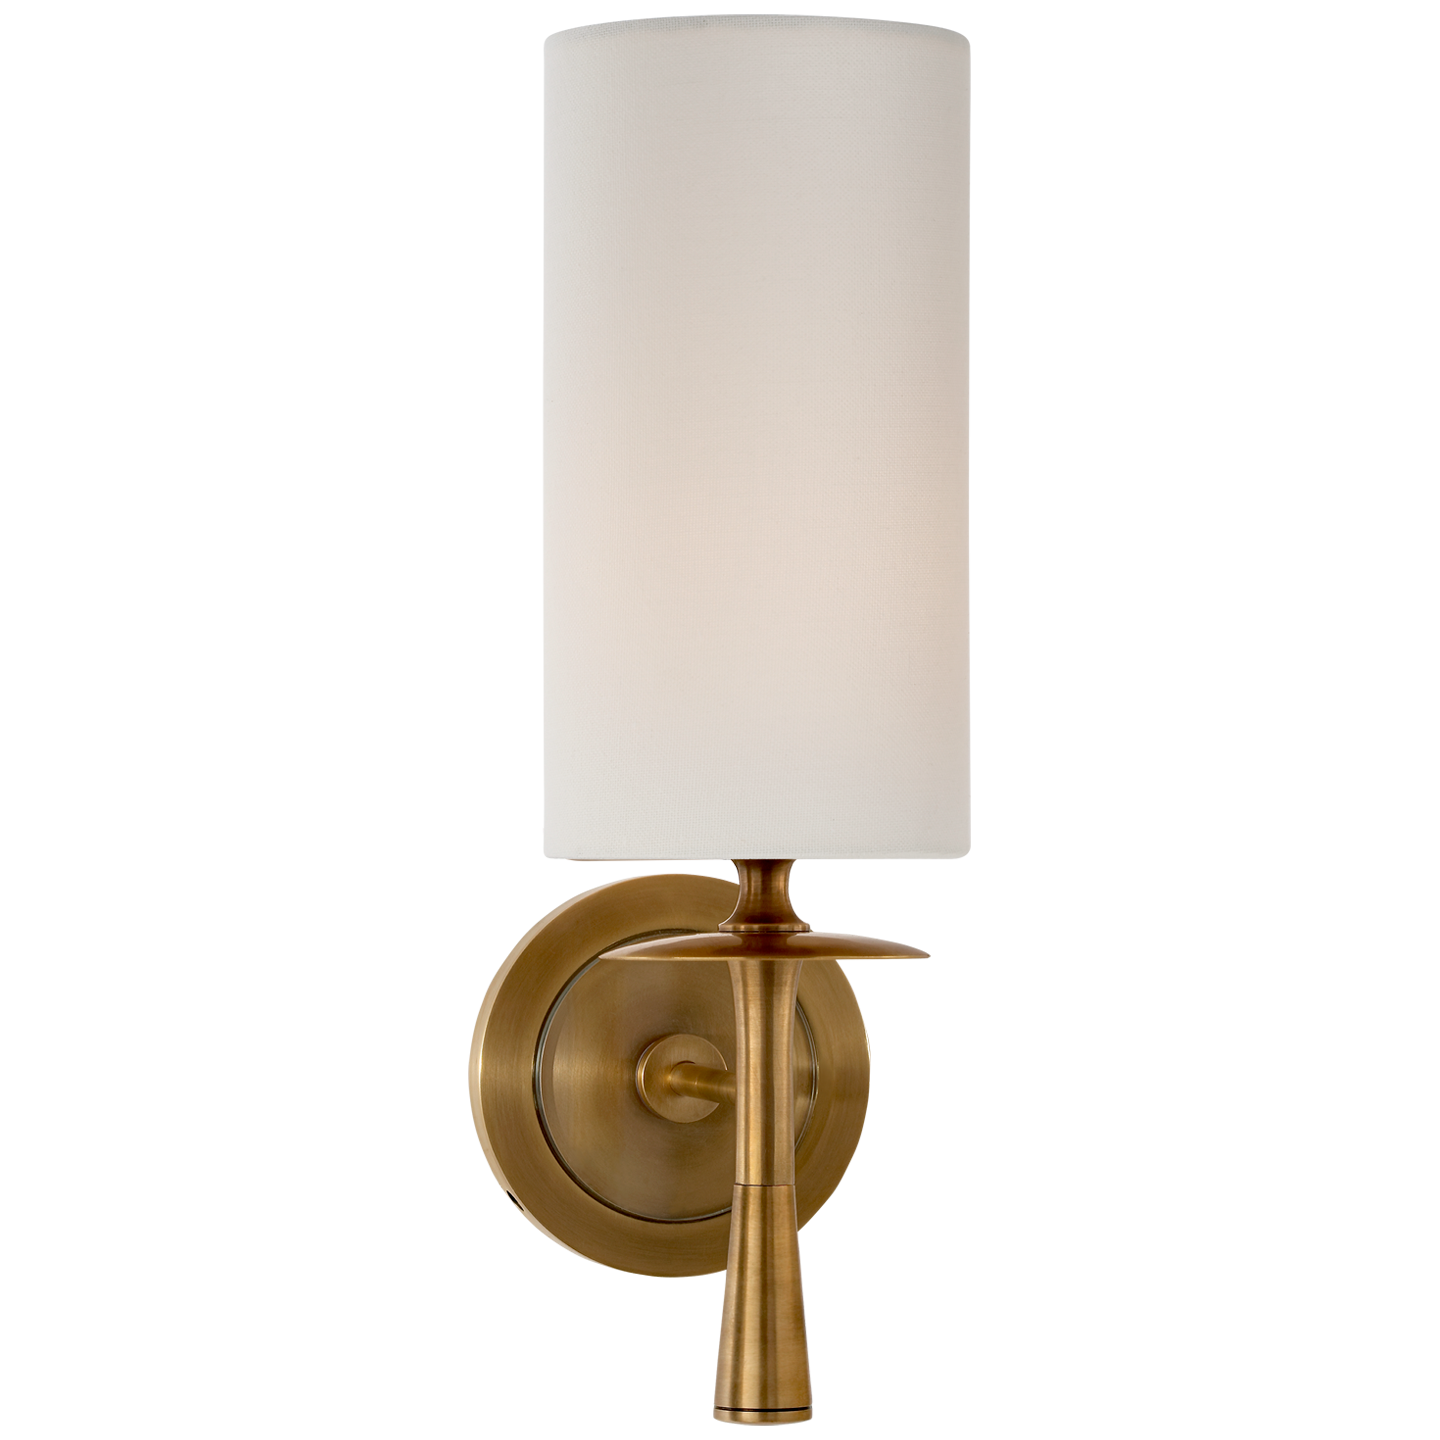 Drunmore Single Brass Wall Lamp